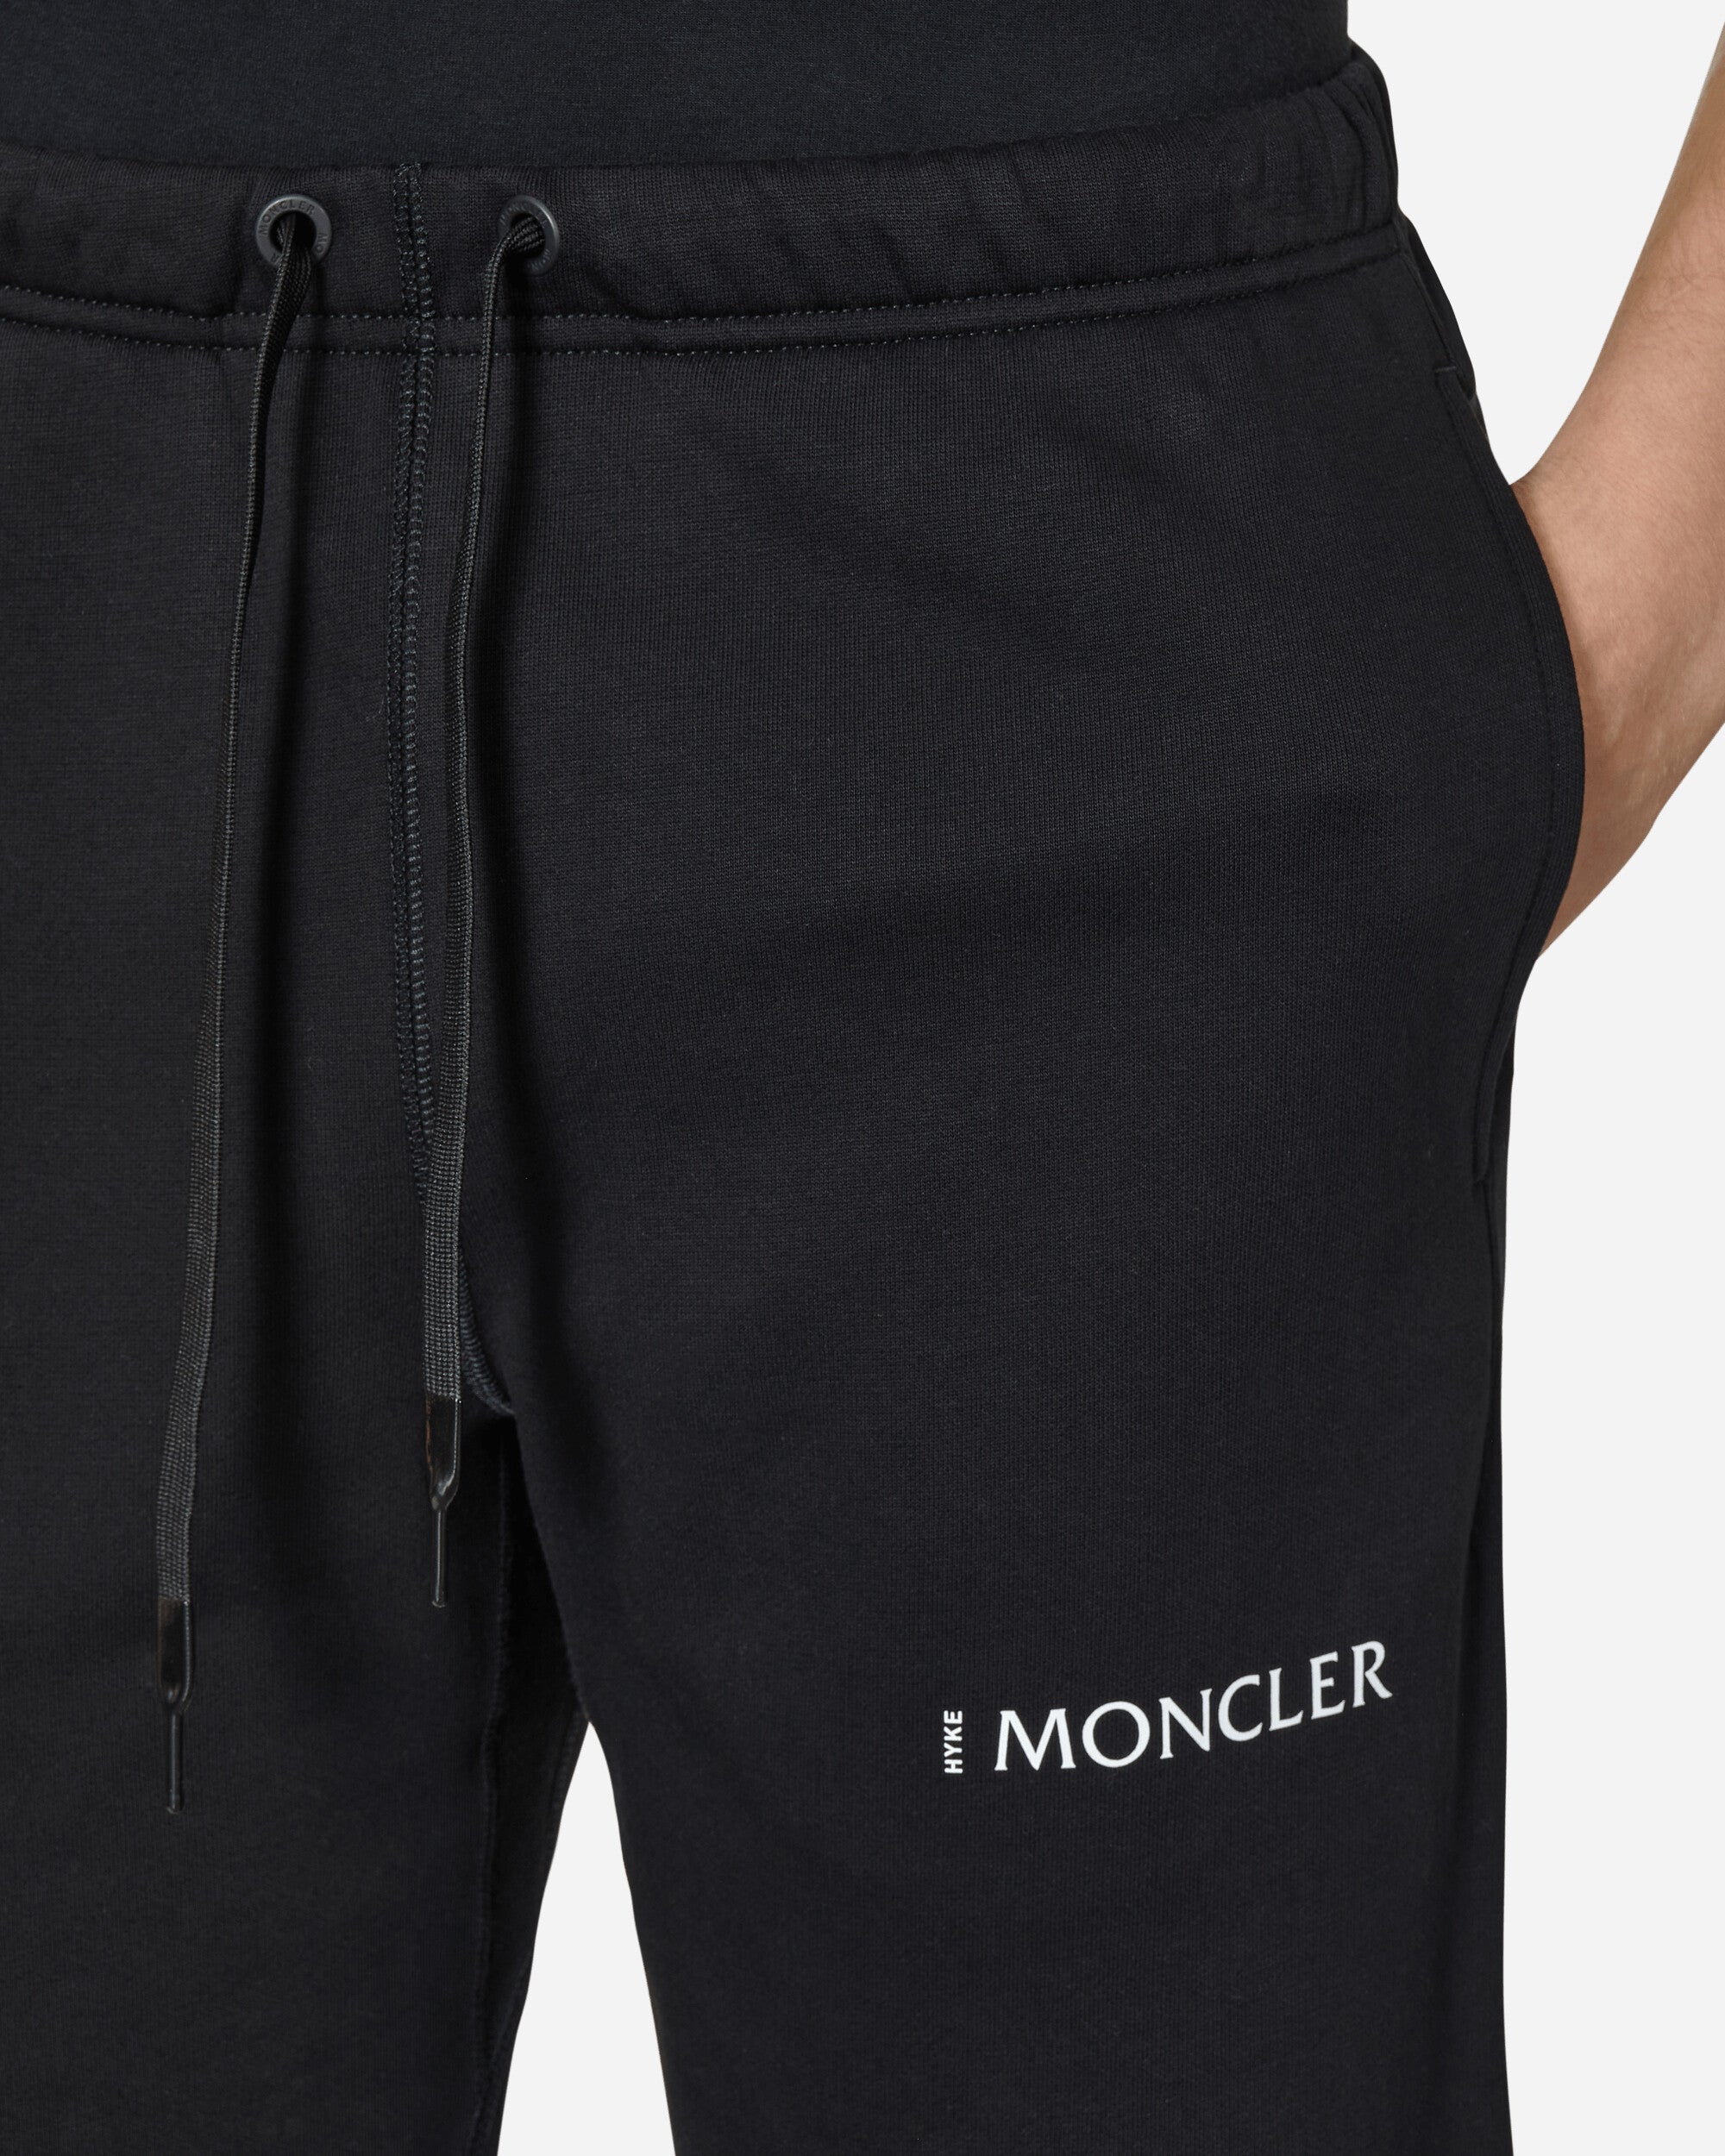 Moncler Genius 4 Moncler Hyke Sweat Bottoms Black Pants Trousers 8H00001M2719 999